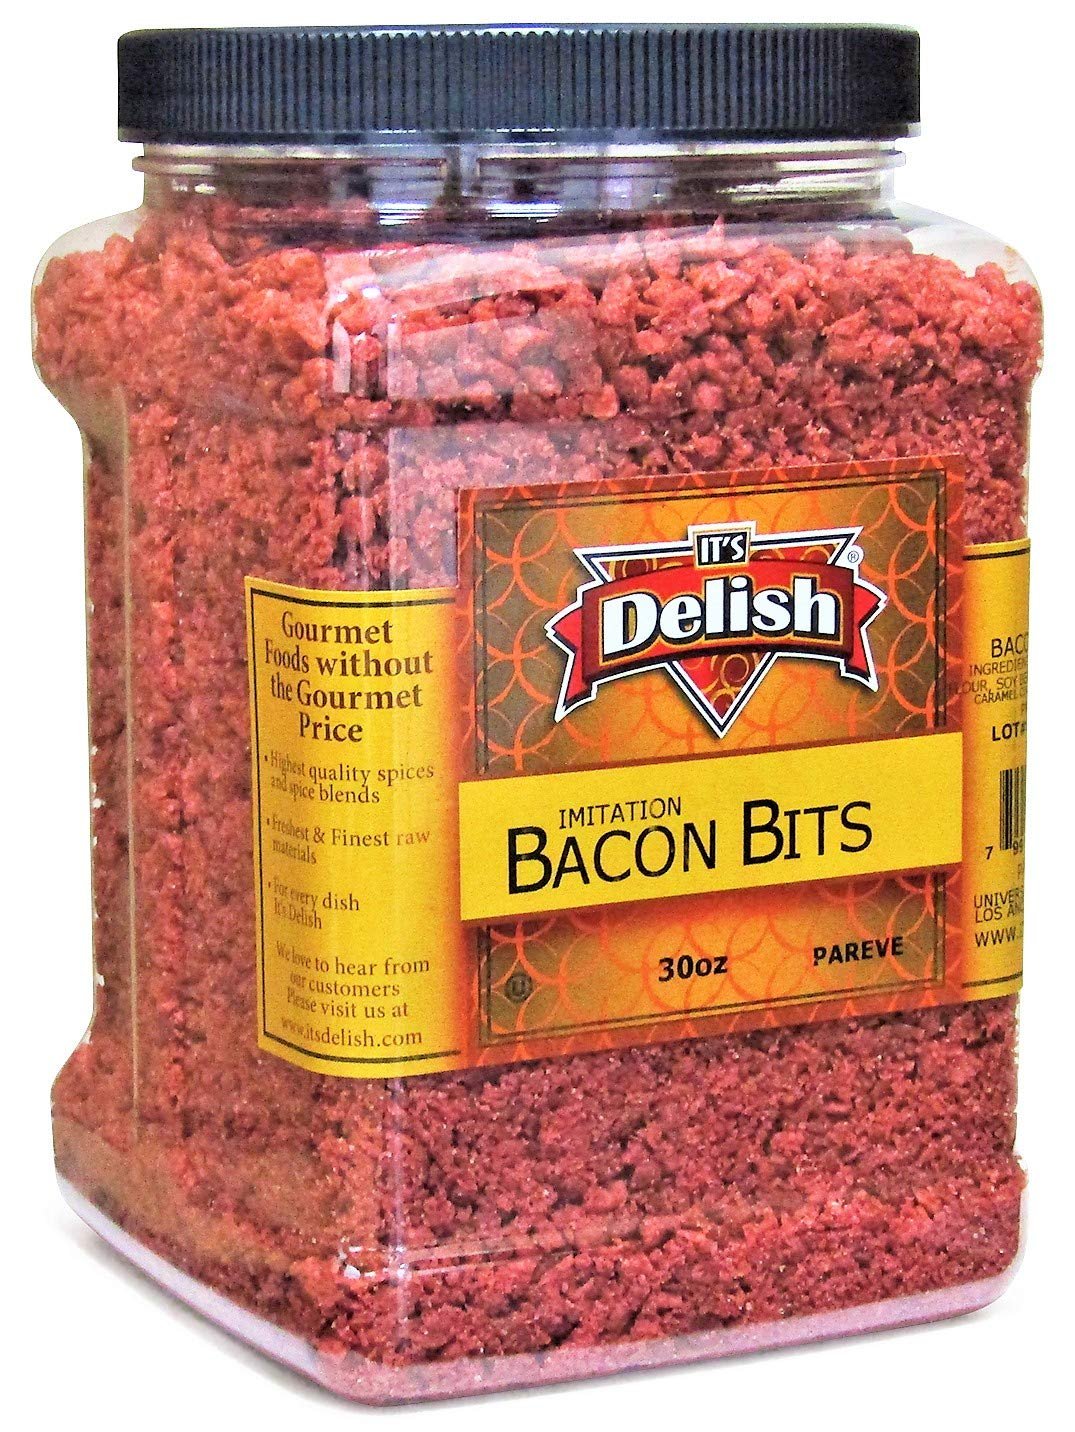 It's Delish Imitation Bacon Bits 30 Oz Jumbo Reusable Container | Kosher Parve Vegan for Salad Topping, Eggs, Baked Potatoes